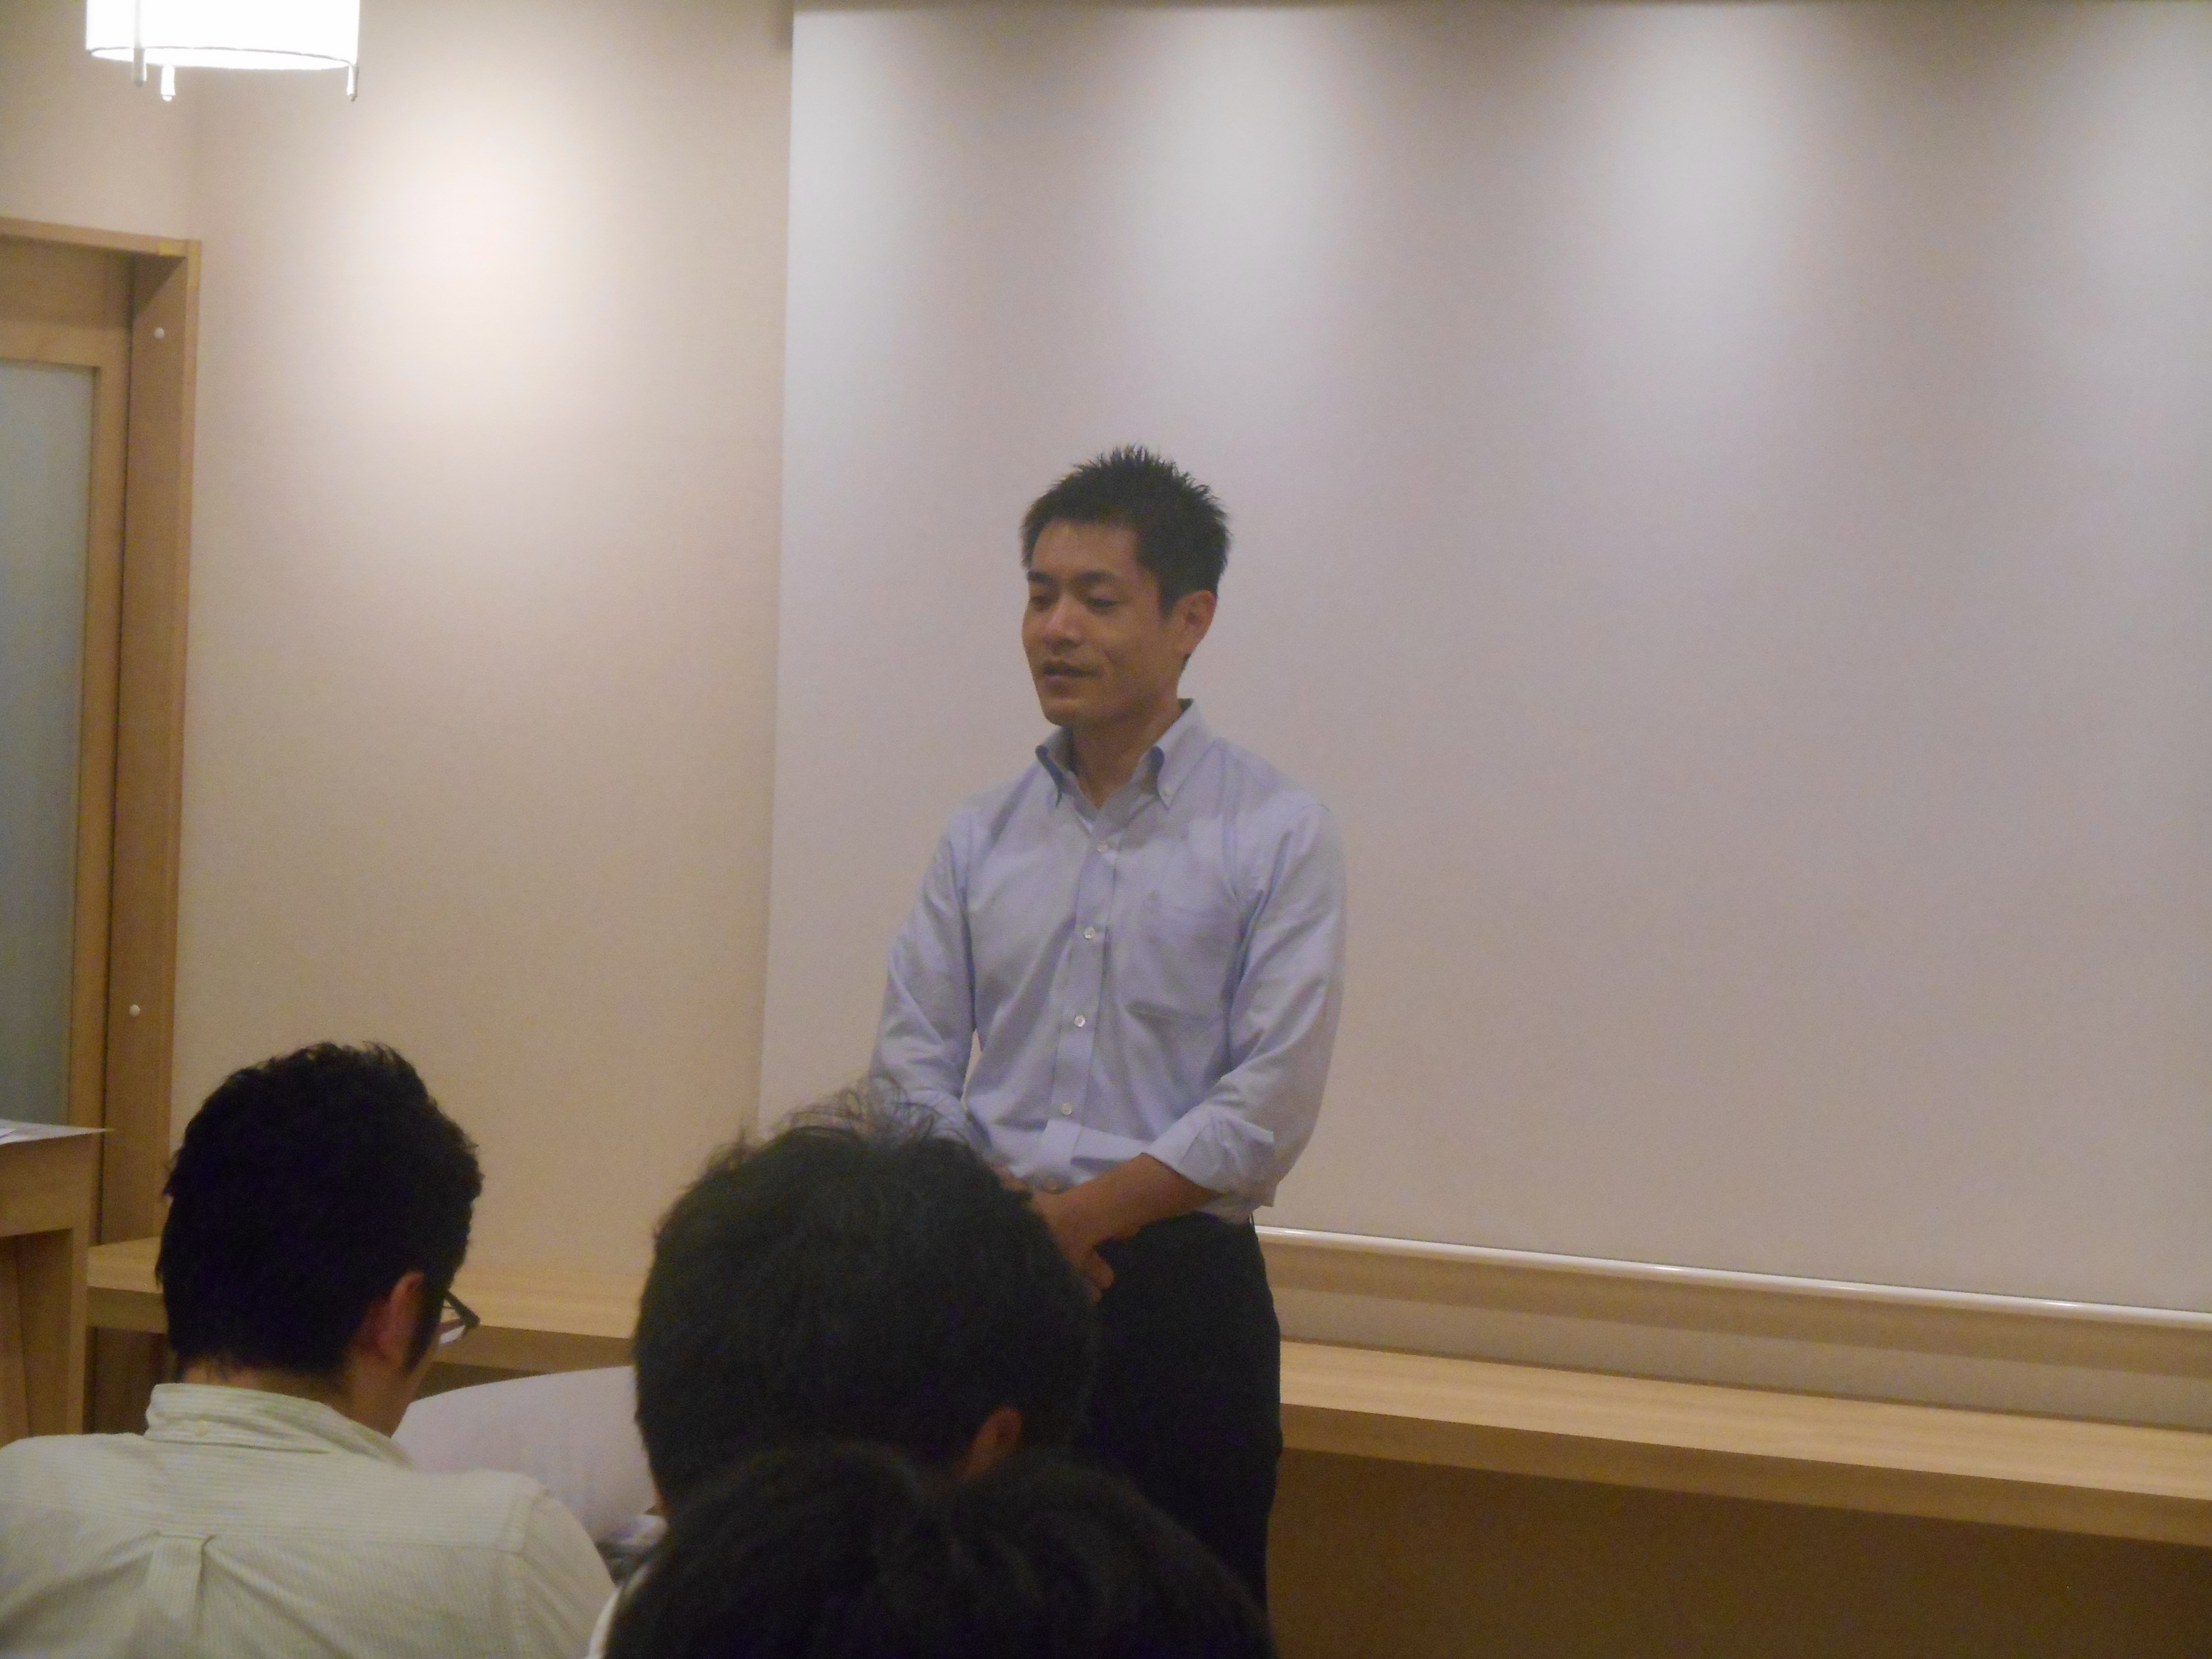 DSCN1888 - AoMoLink〜赤坂〜の第2回勉強会&交流会開催します。